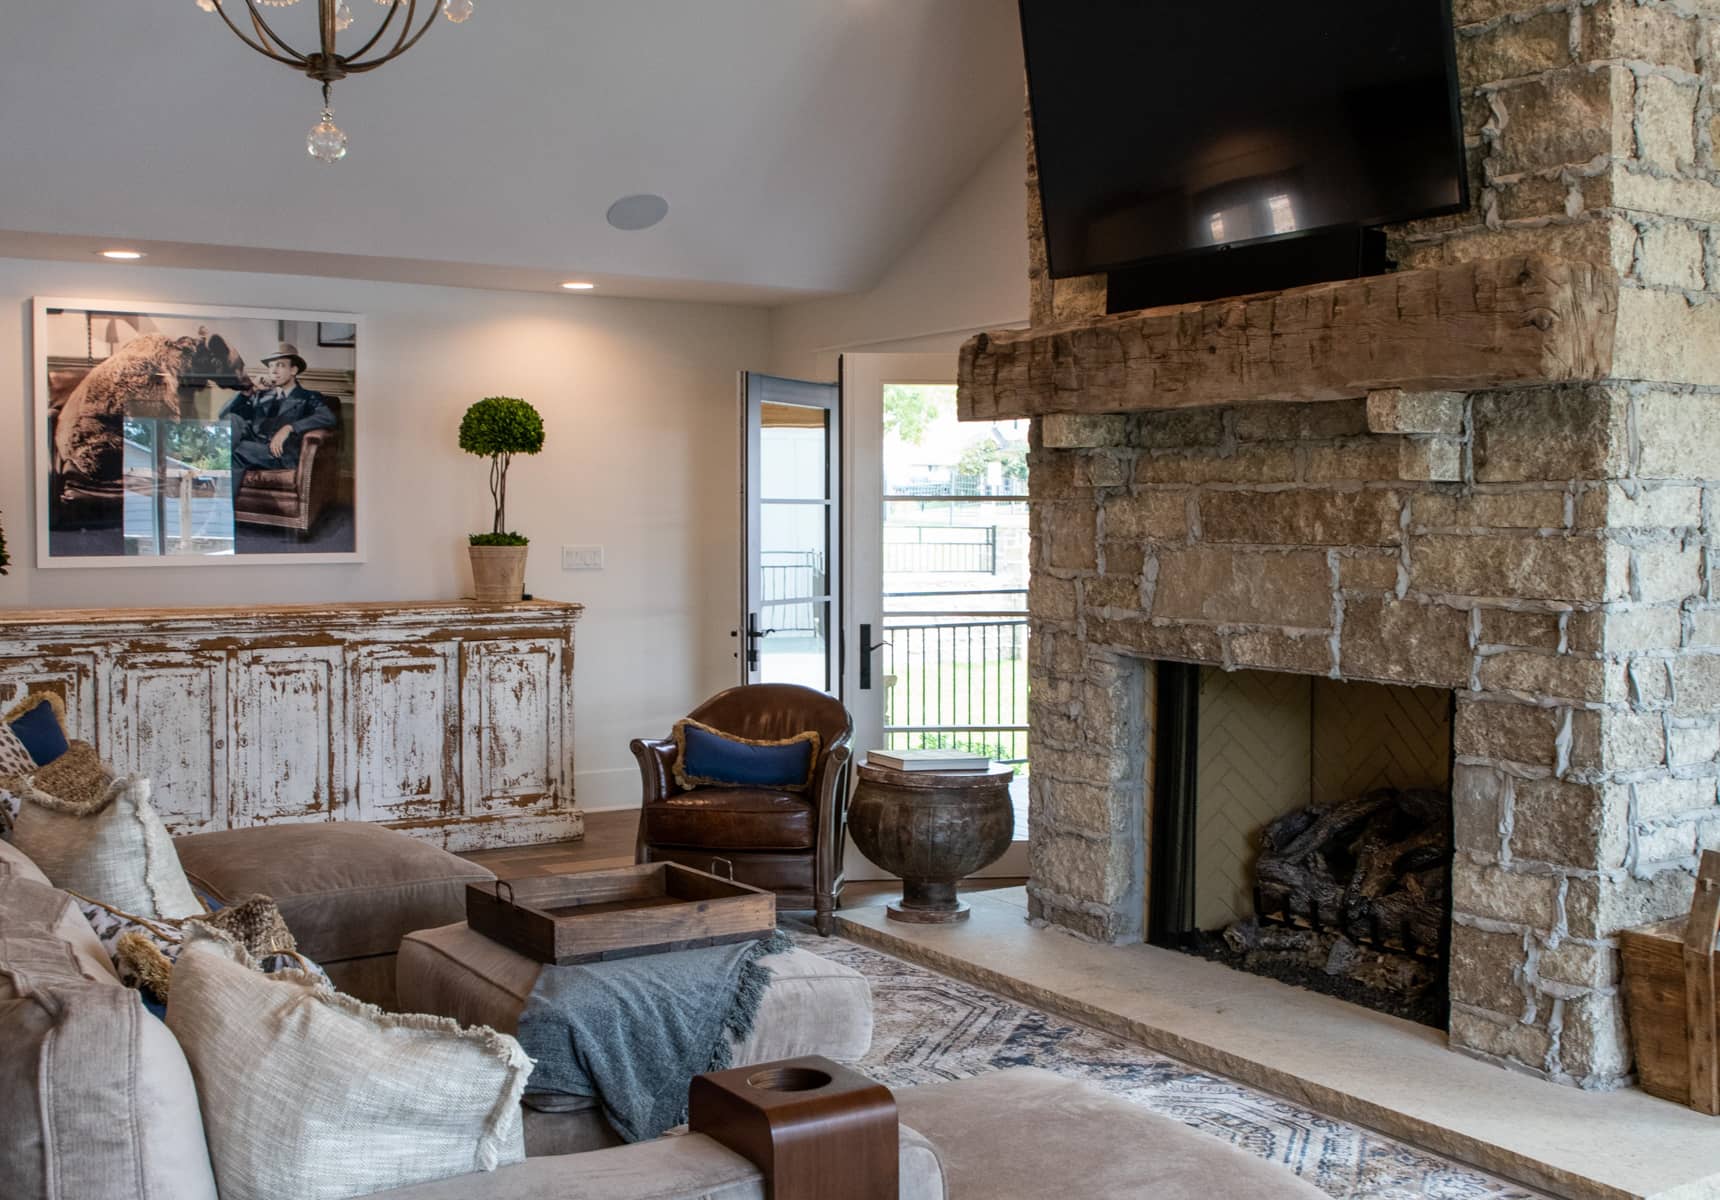 Vivi living room with a flatscreen TV and Fireplace